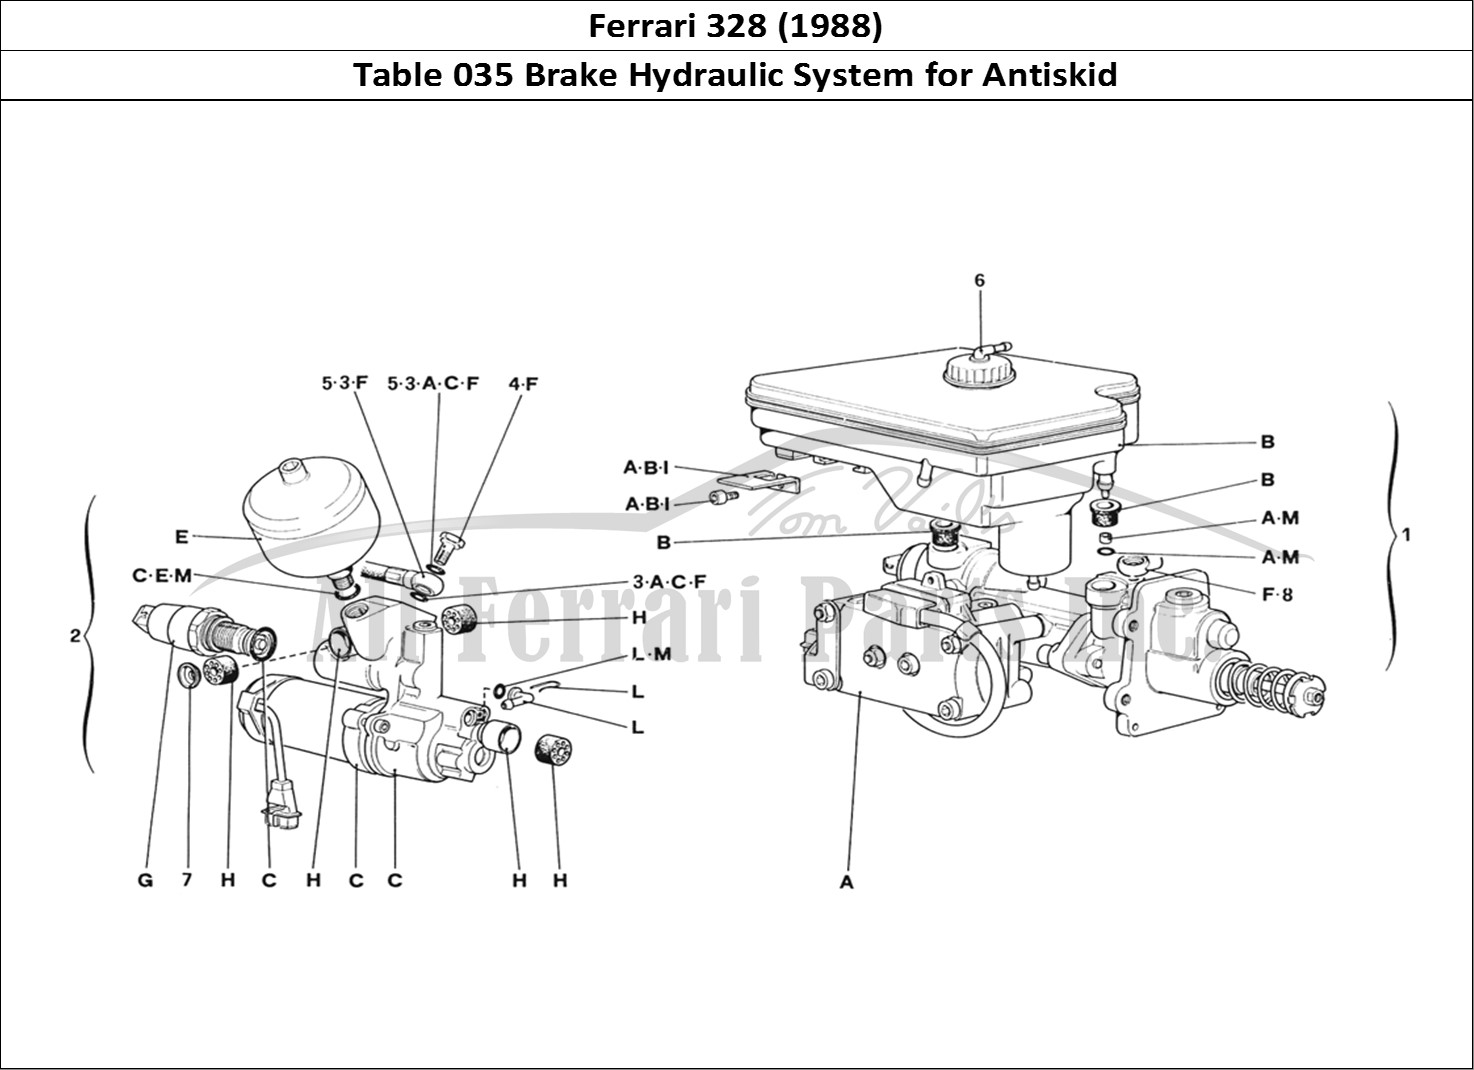 Ferrari Parts Ferrari 328 (1988) Page 035 Hydraulic System for Anti